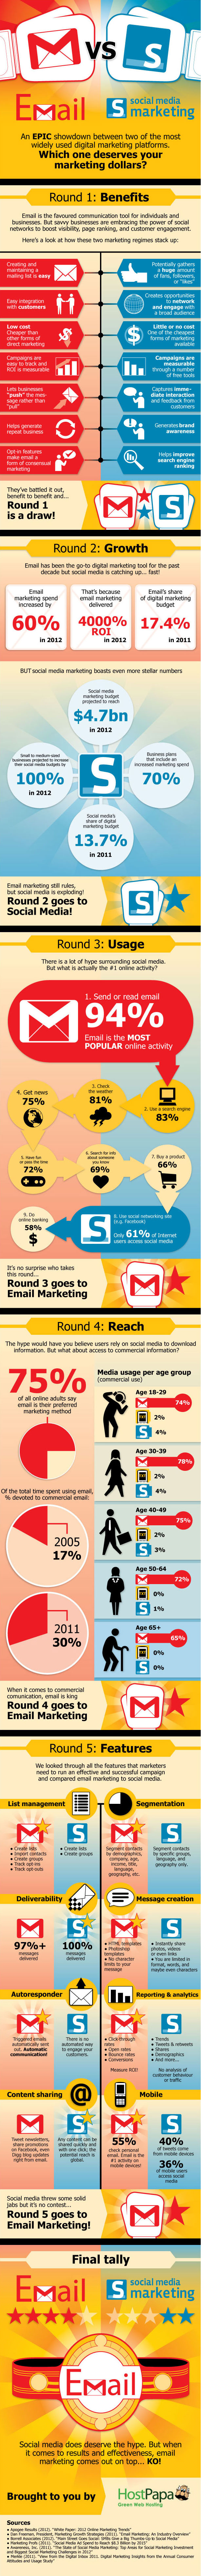 Infographic E-mail marketing vs Social media